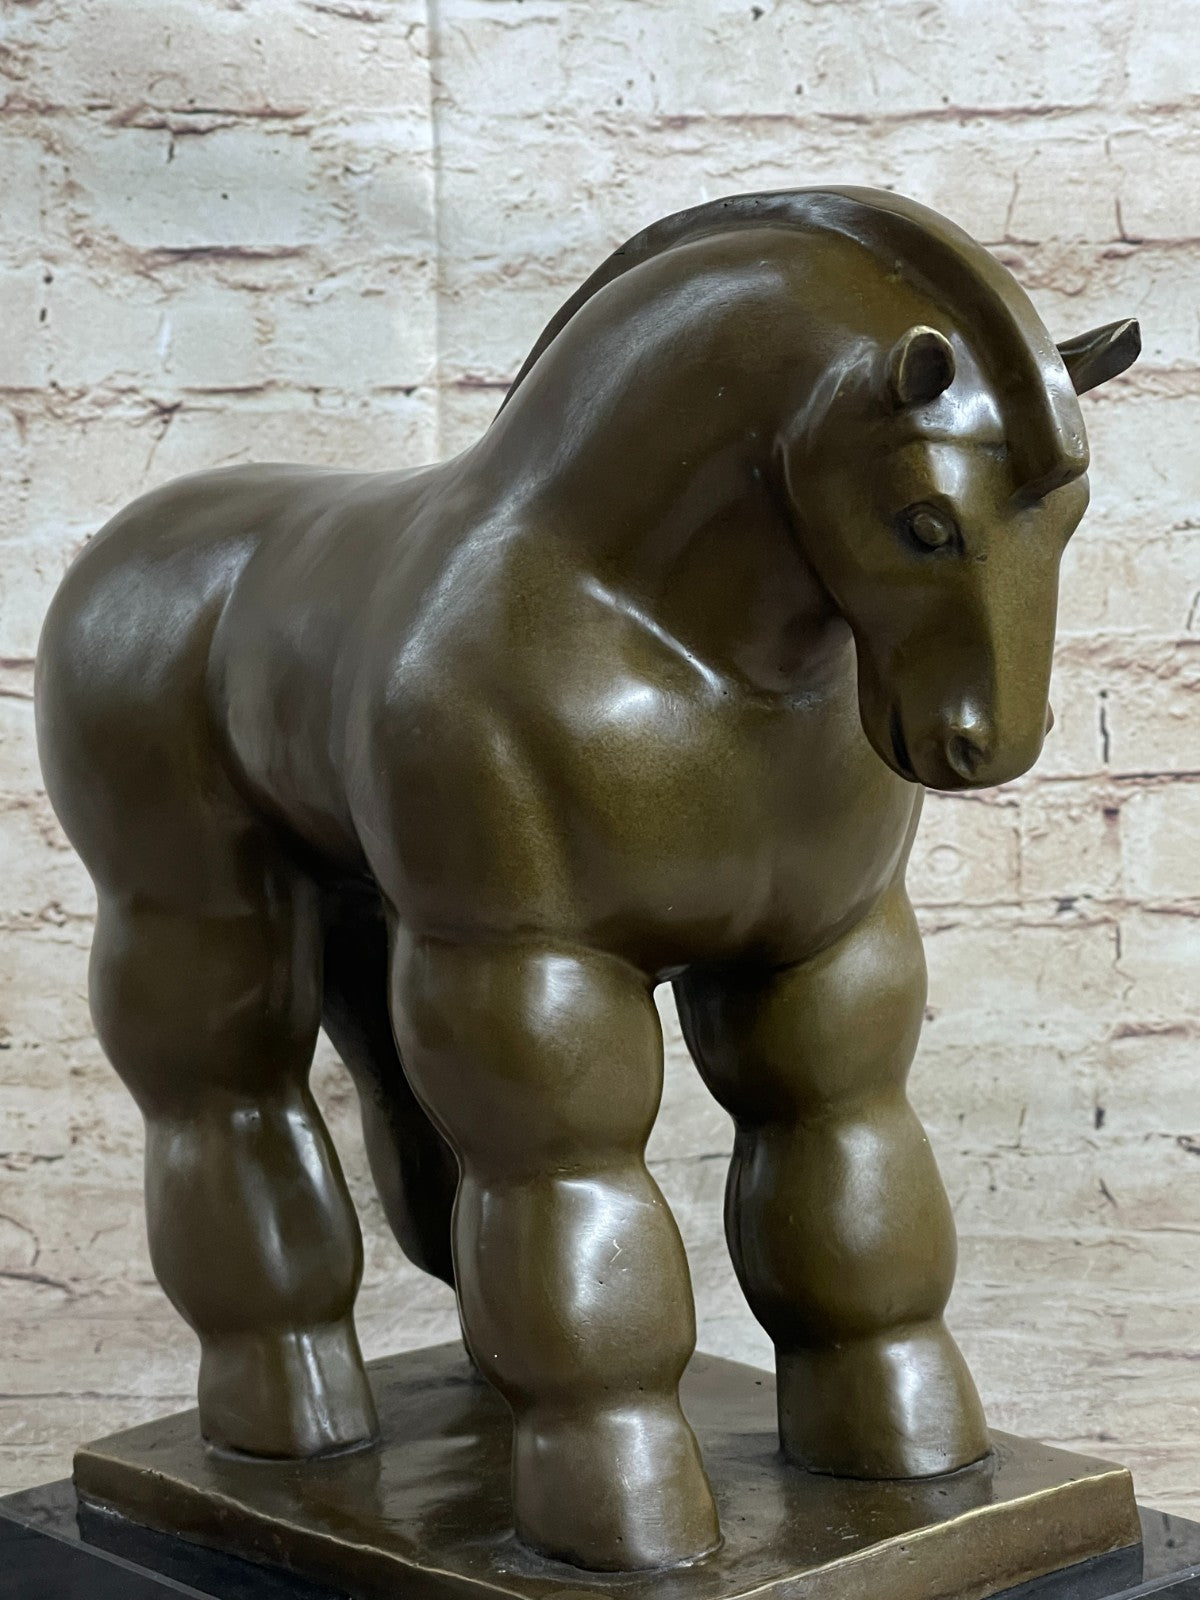 F. BOTERO "Trojan Horse" ART BRONZE SCULPTURE, SIGNED, SEALED FIGURINE FIGURE